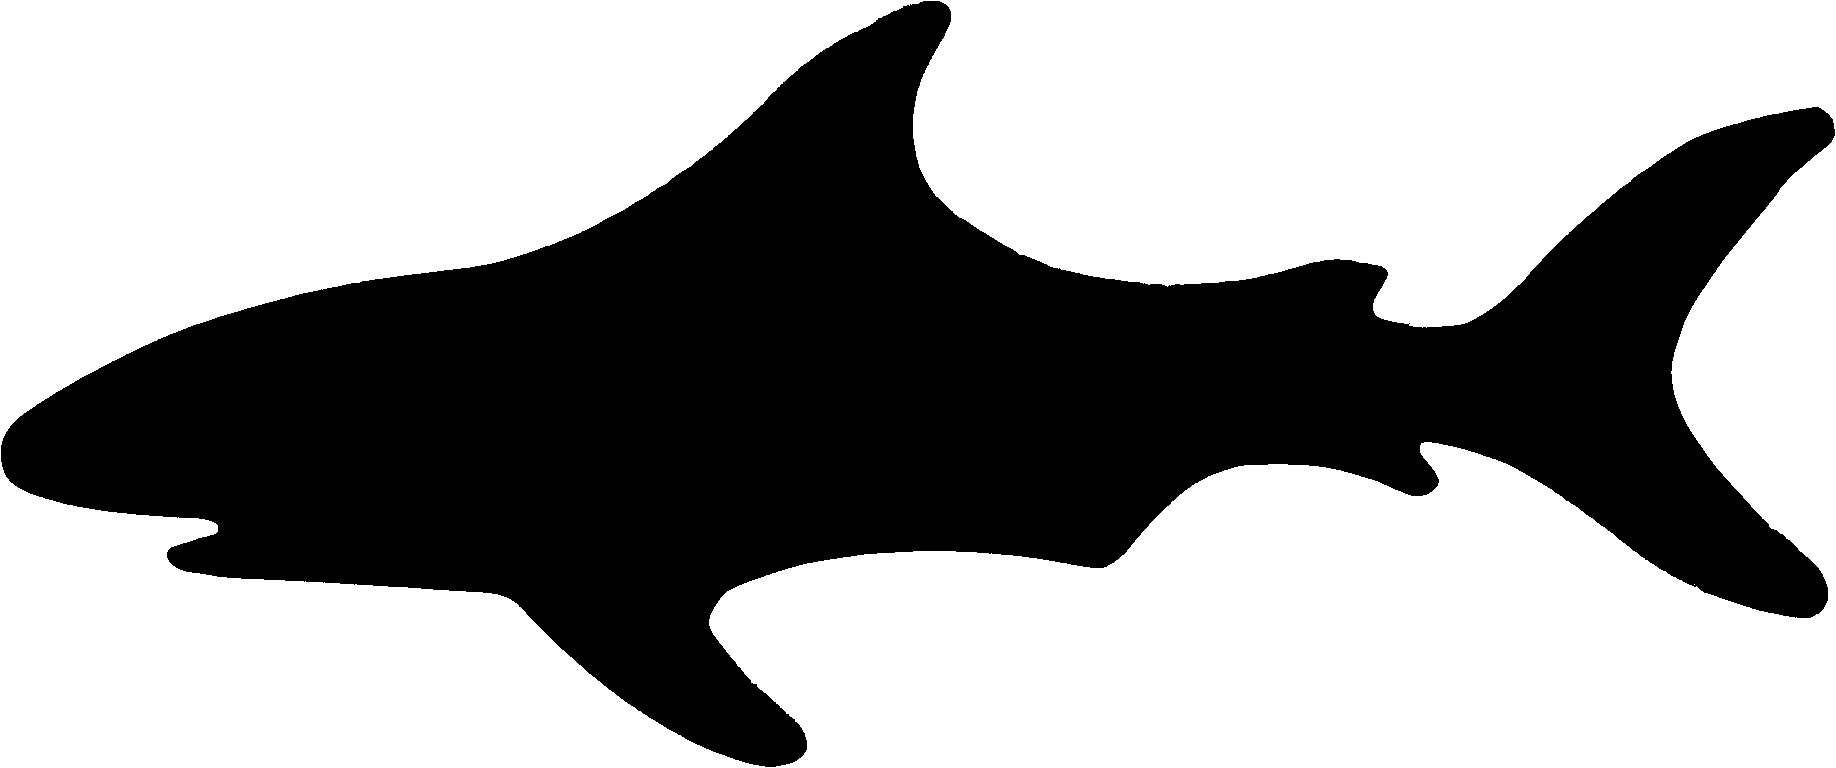 Free Shark Clipart - Cliparts.co